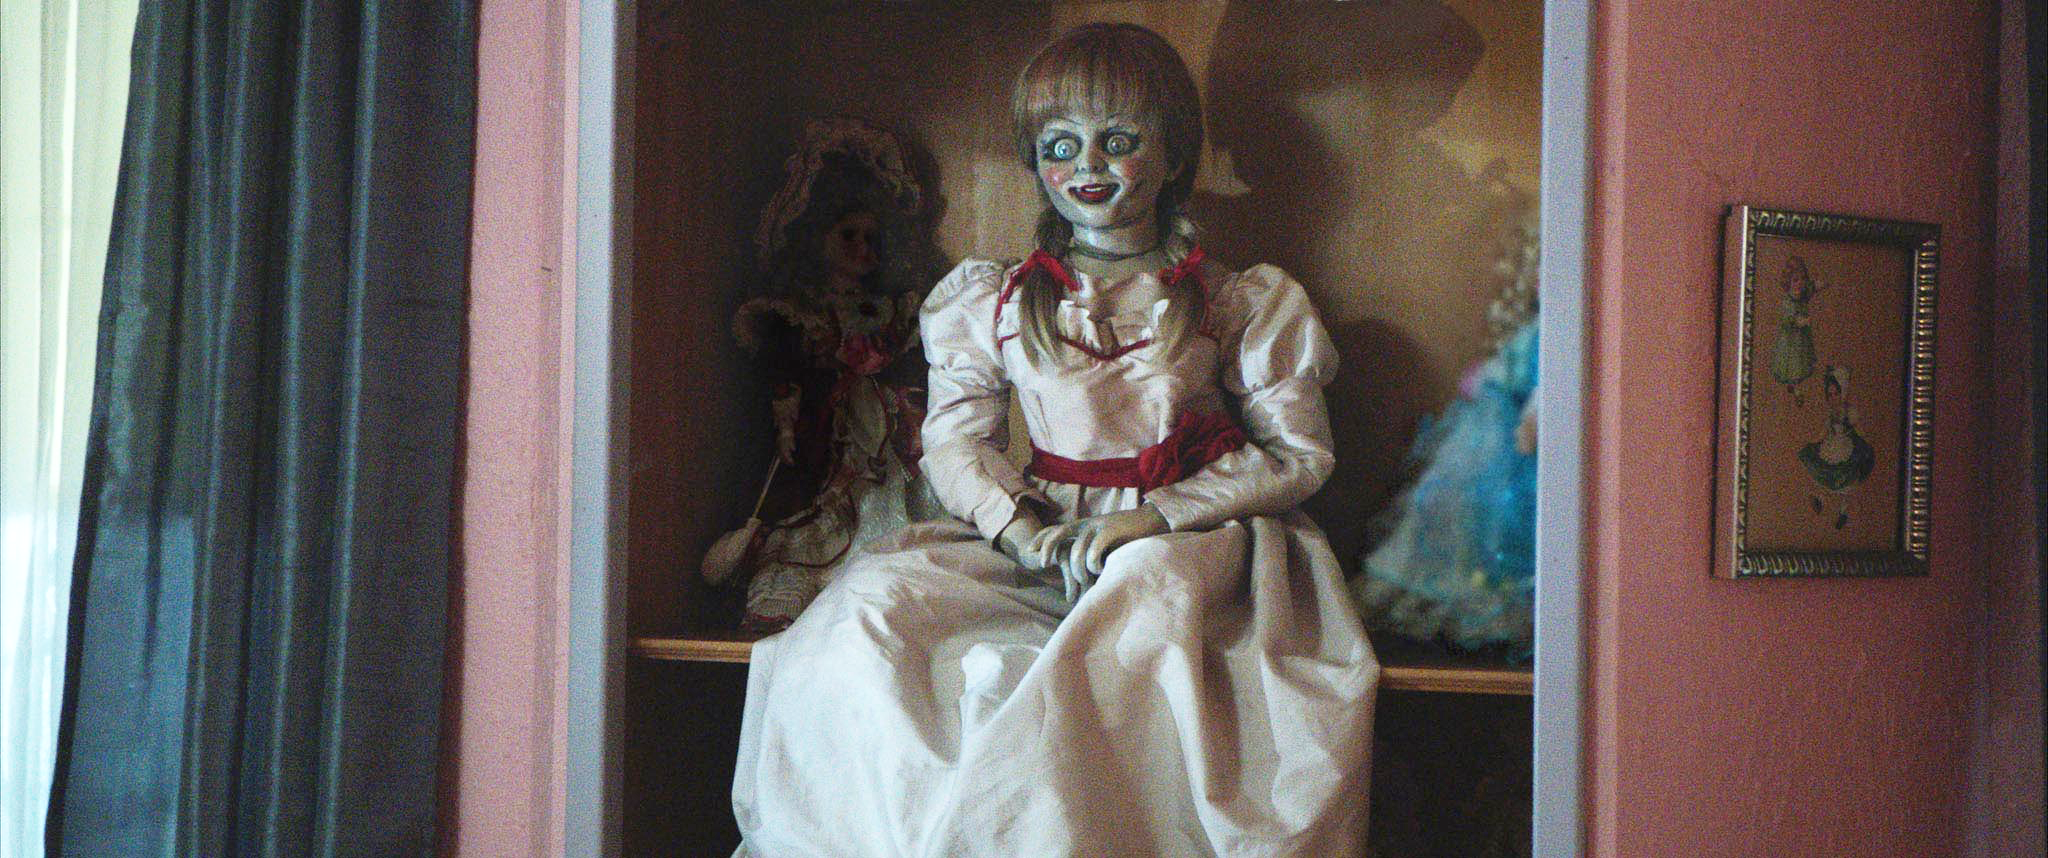 very scary dolls